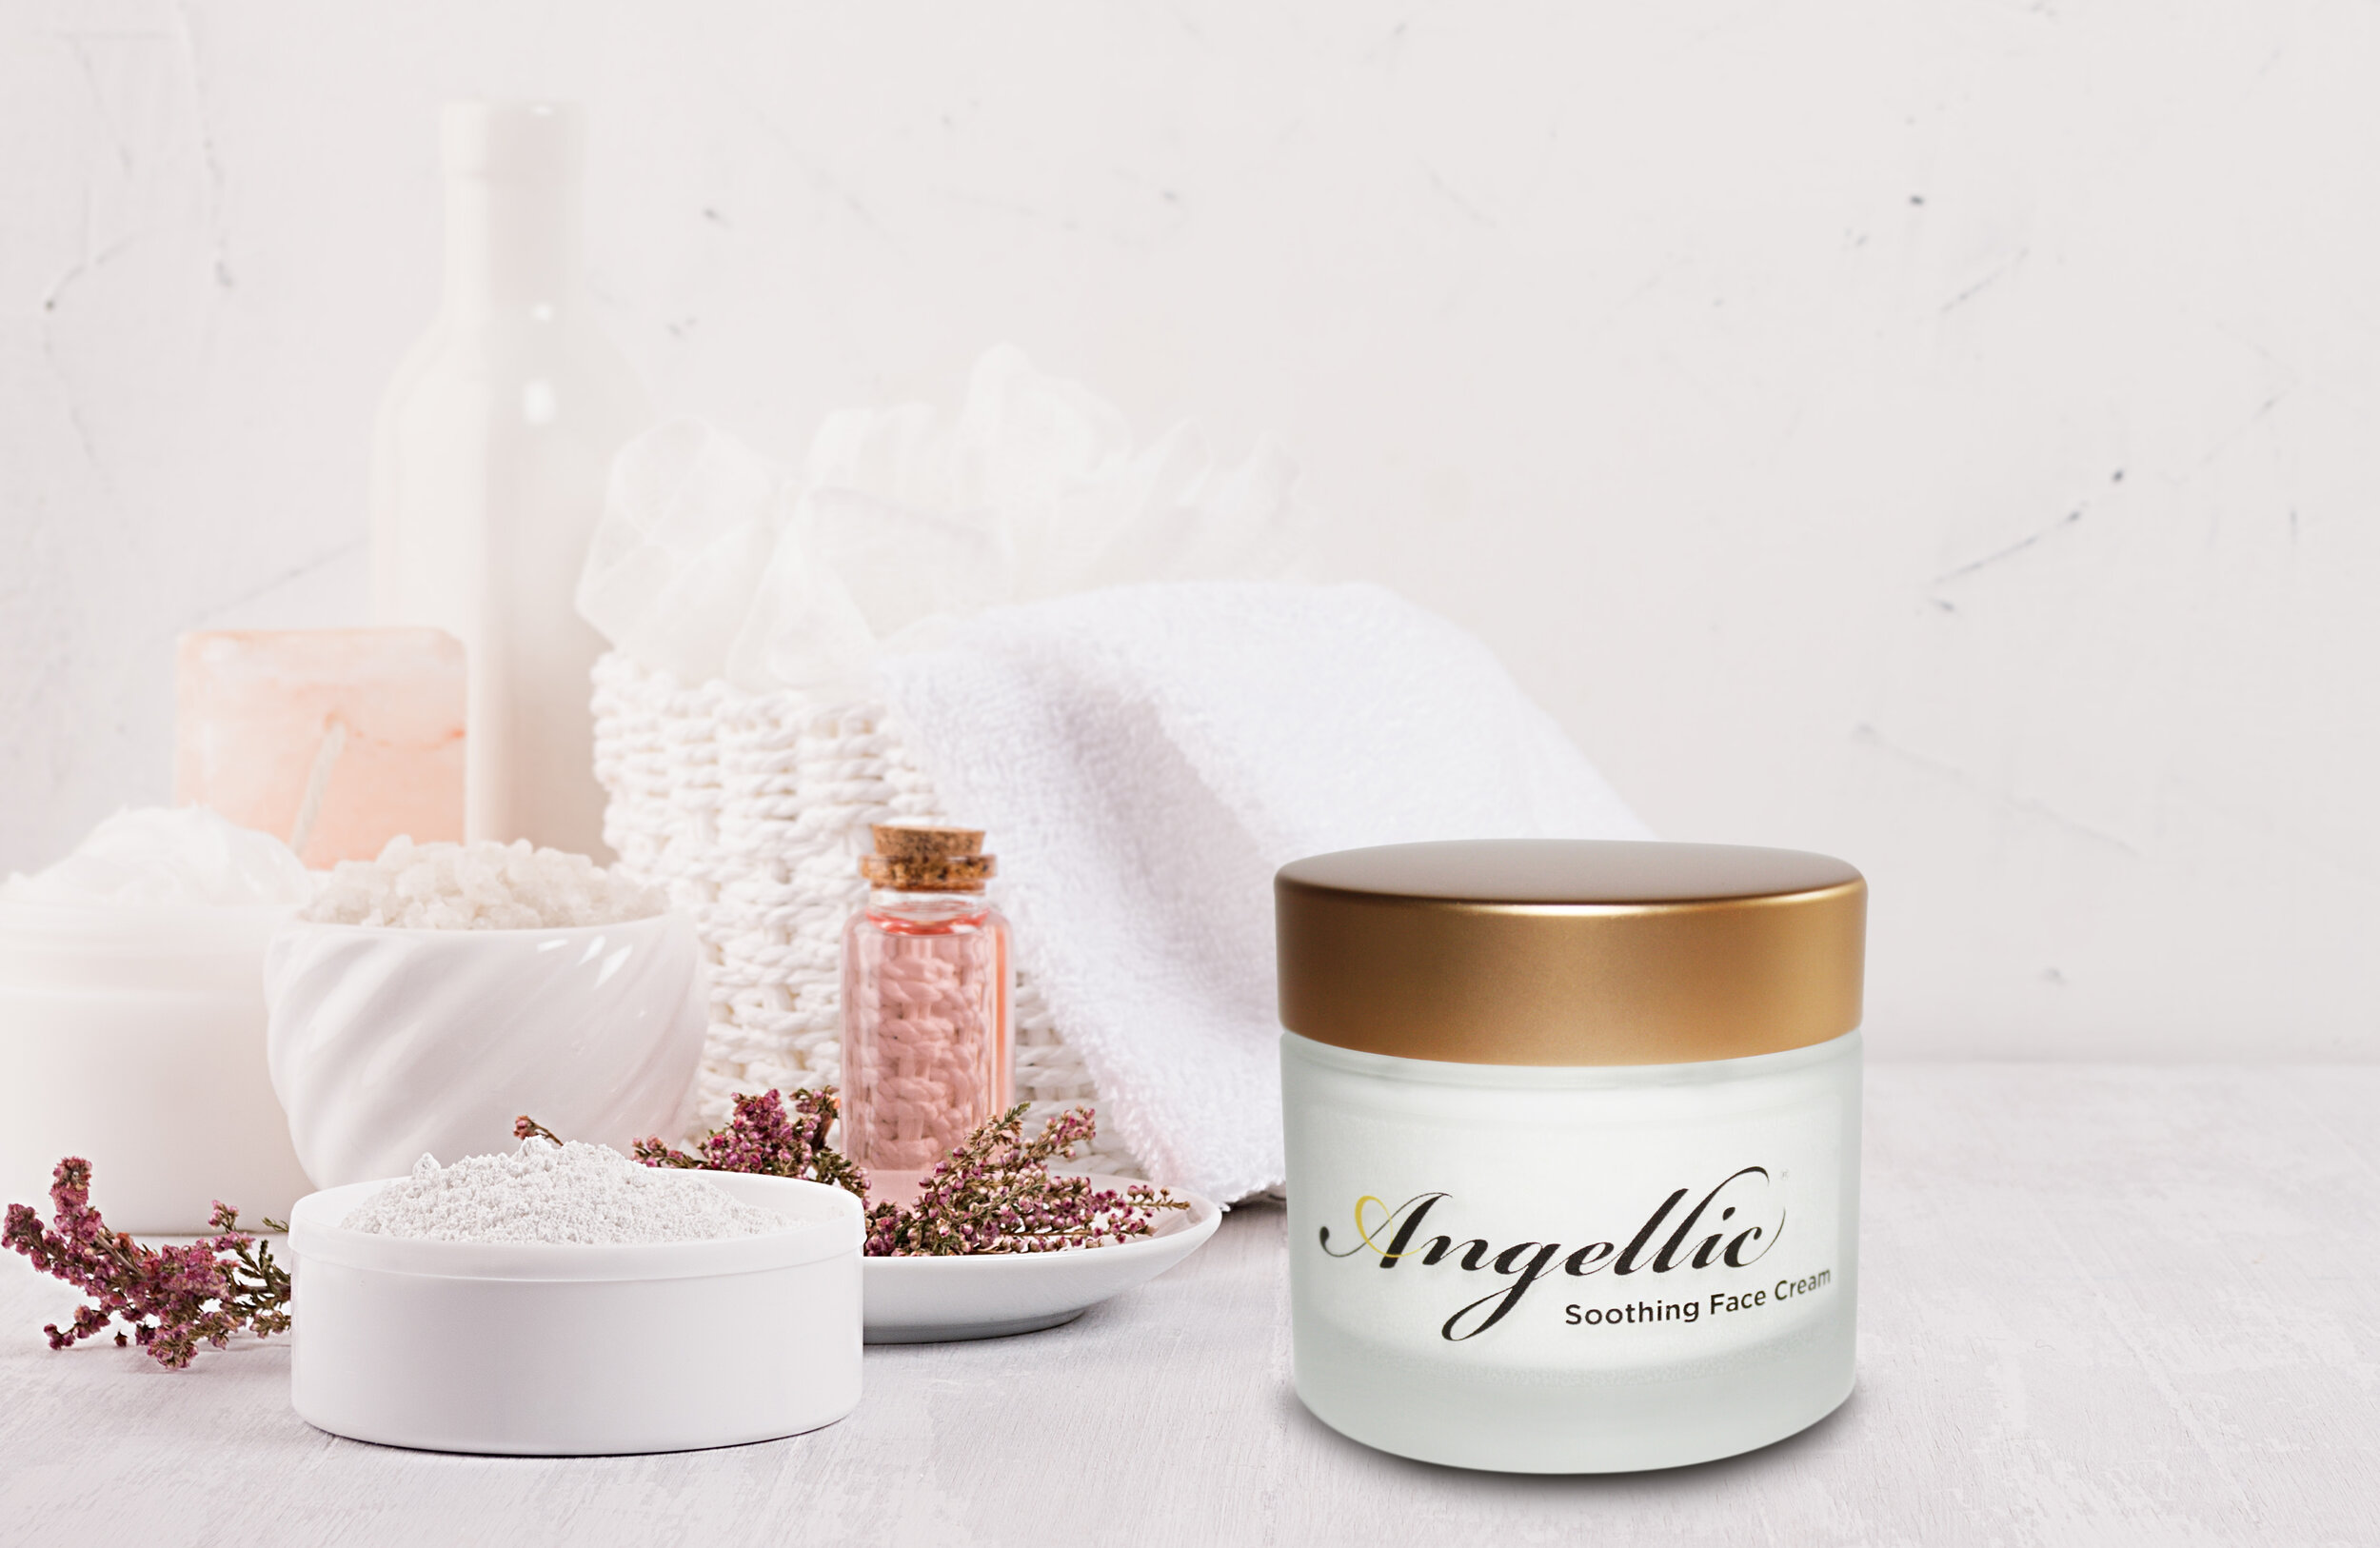 The Angellic Beauty brand